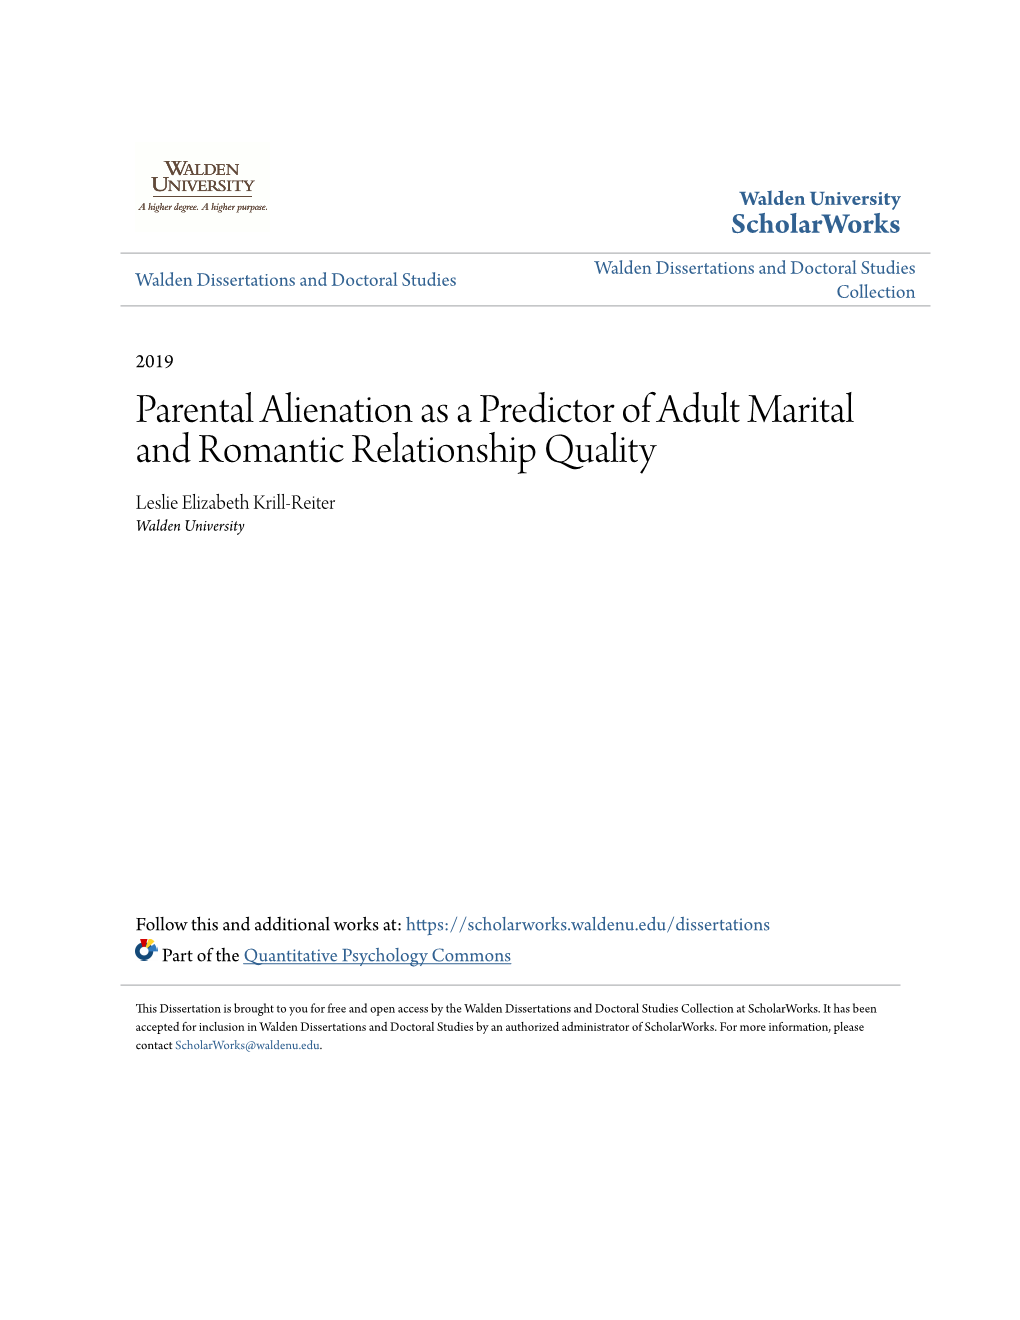 Parental Alienation As a Predictor of Adult Marital and Romantic Relationship Quality Leslie Elizabeth Krill-Reiter Walden University